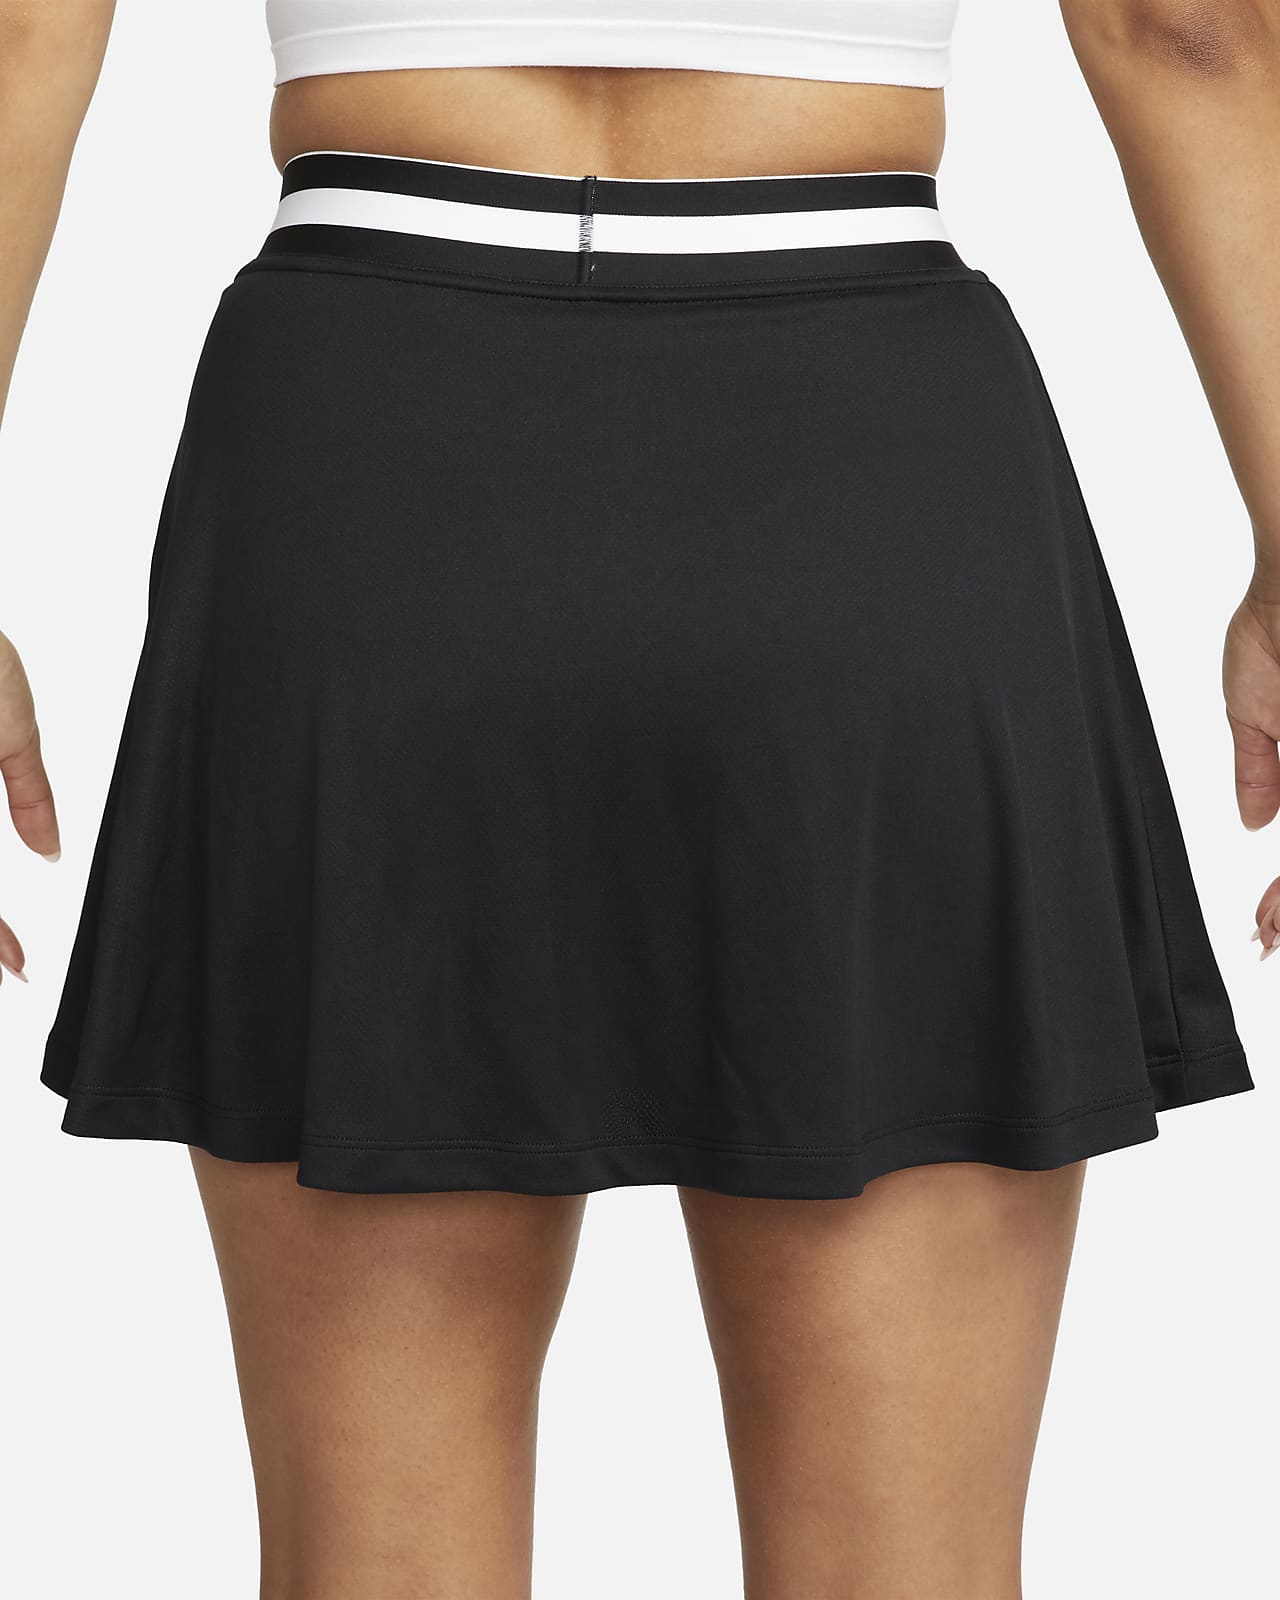 NikeCourt woman Black Pants - Extreme Tennis